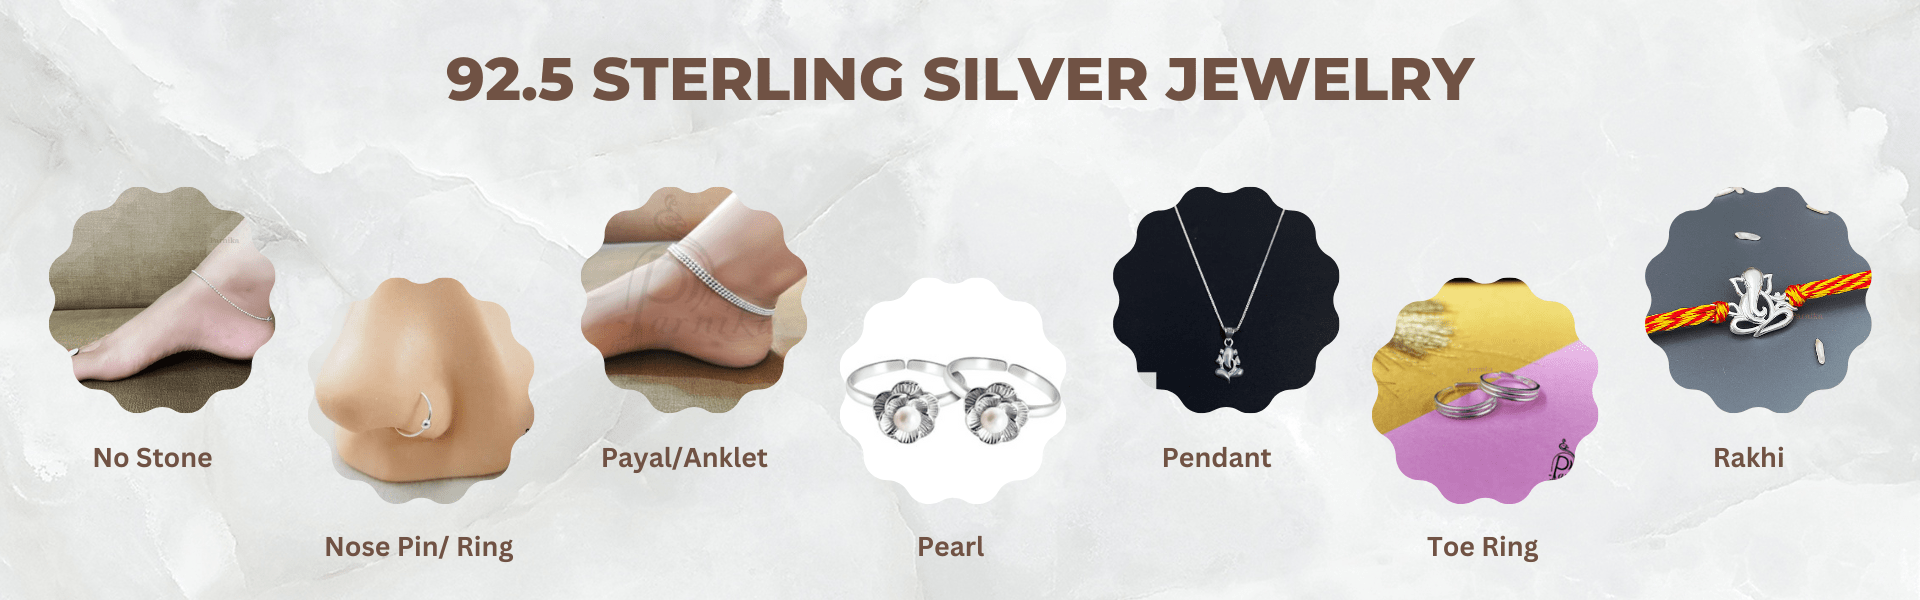 92.5 sterling silver jewellery